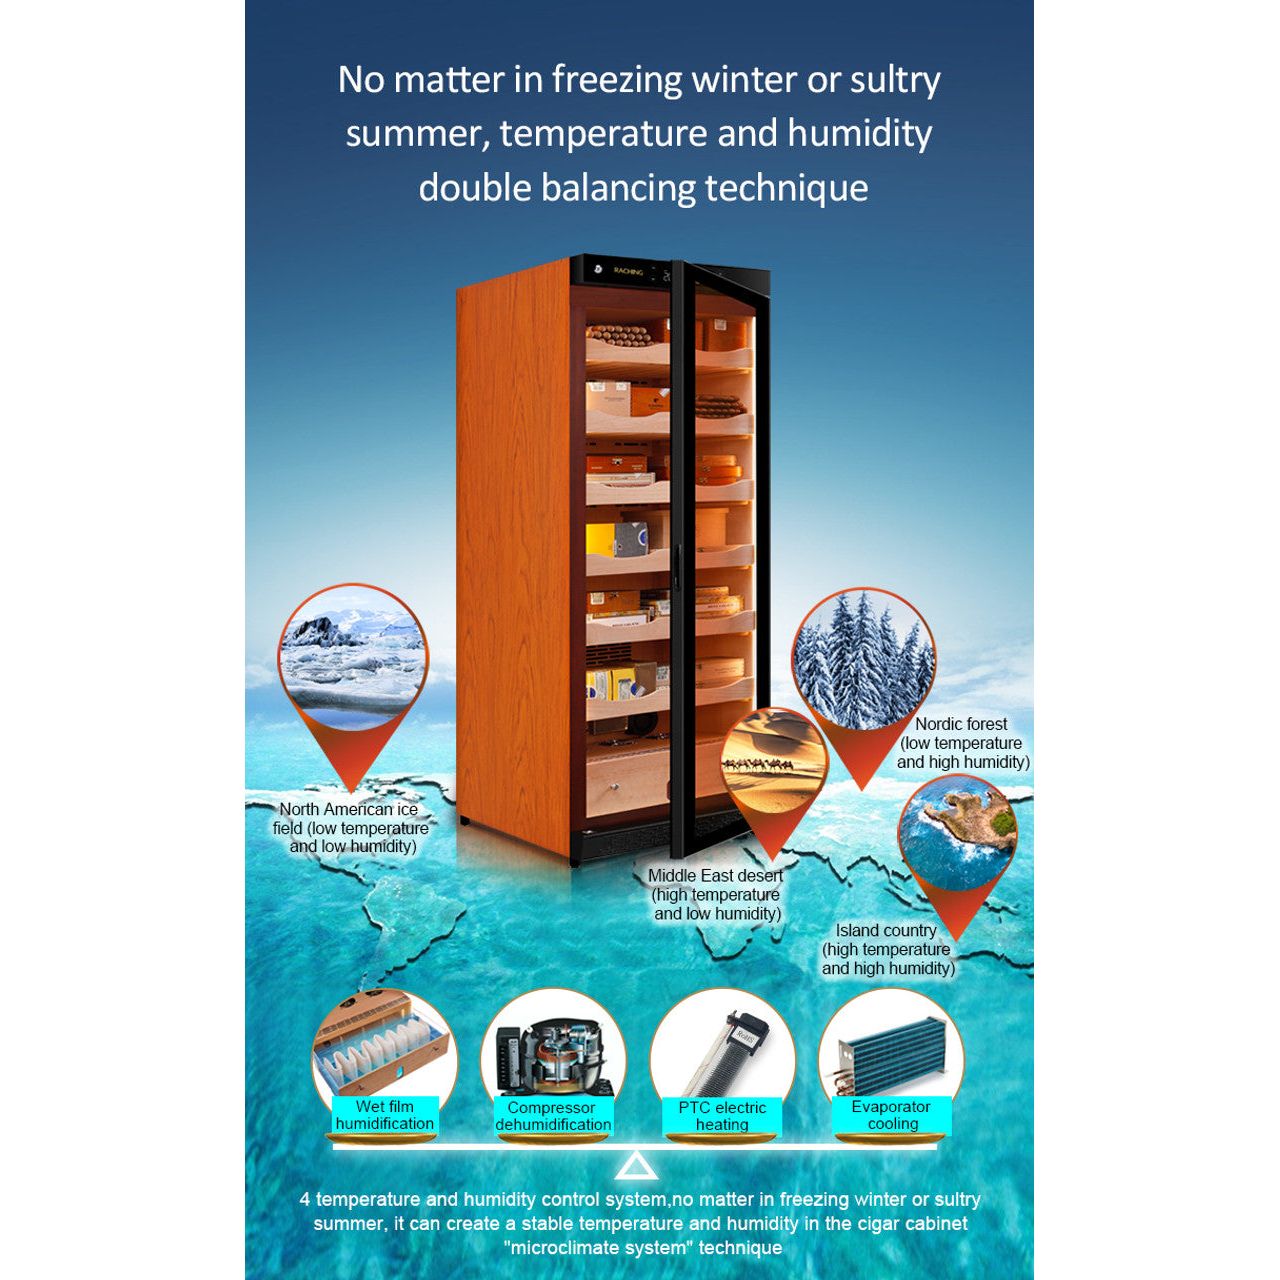 RACHING C330A Elecitrc Cigar Humidor Cabinet - 1300 Cigar Capacity